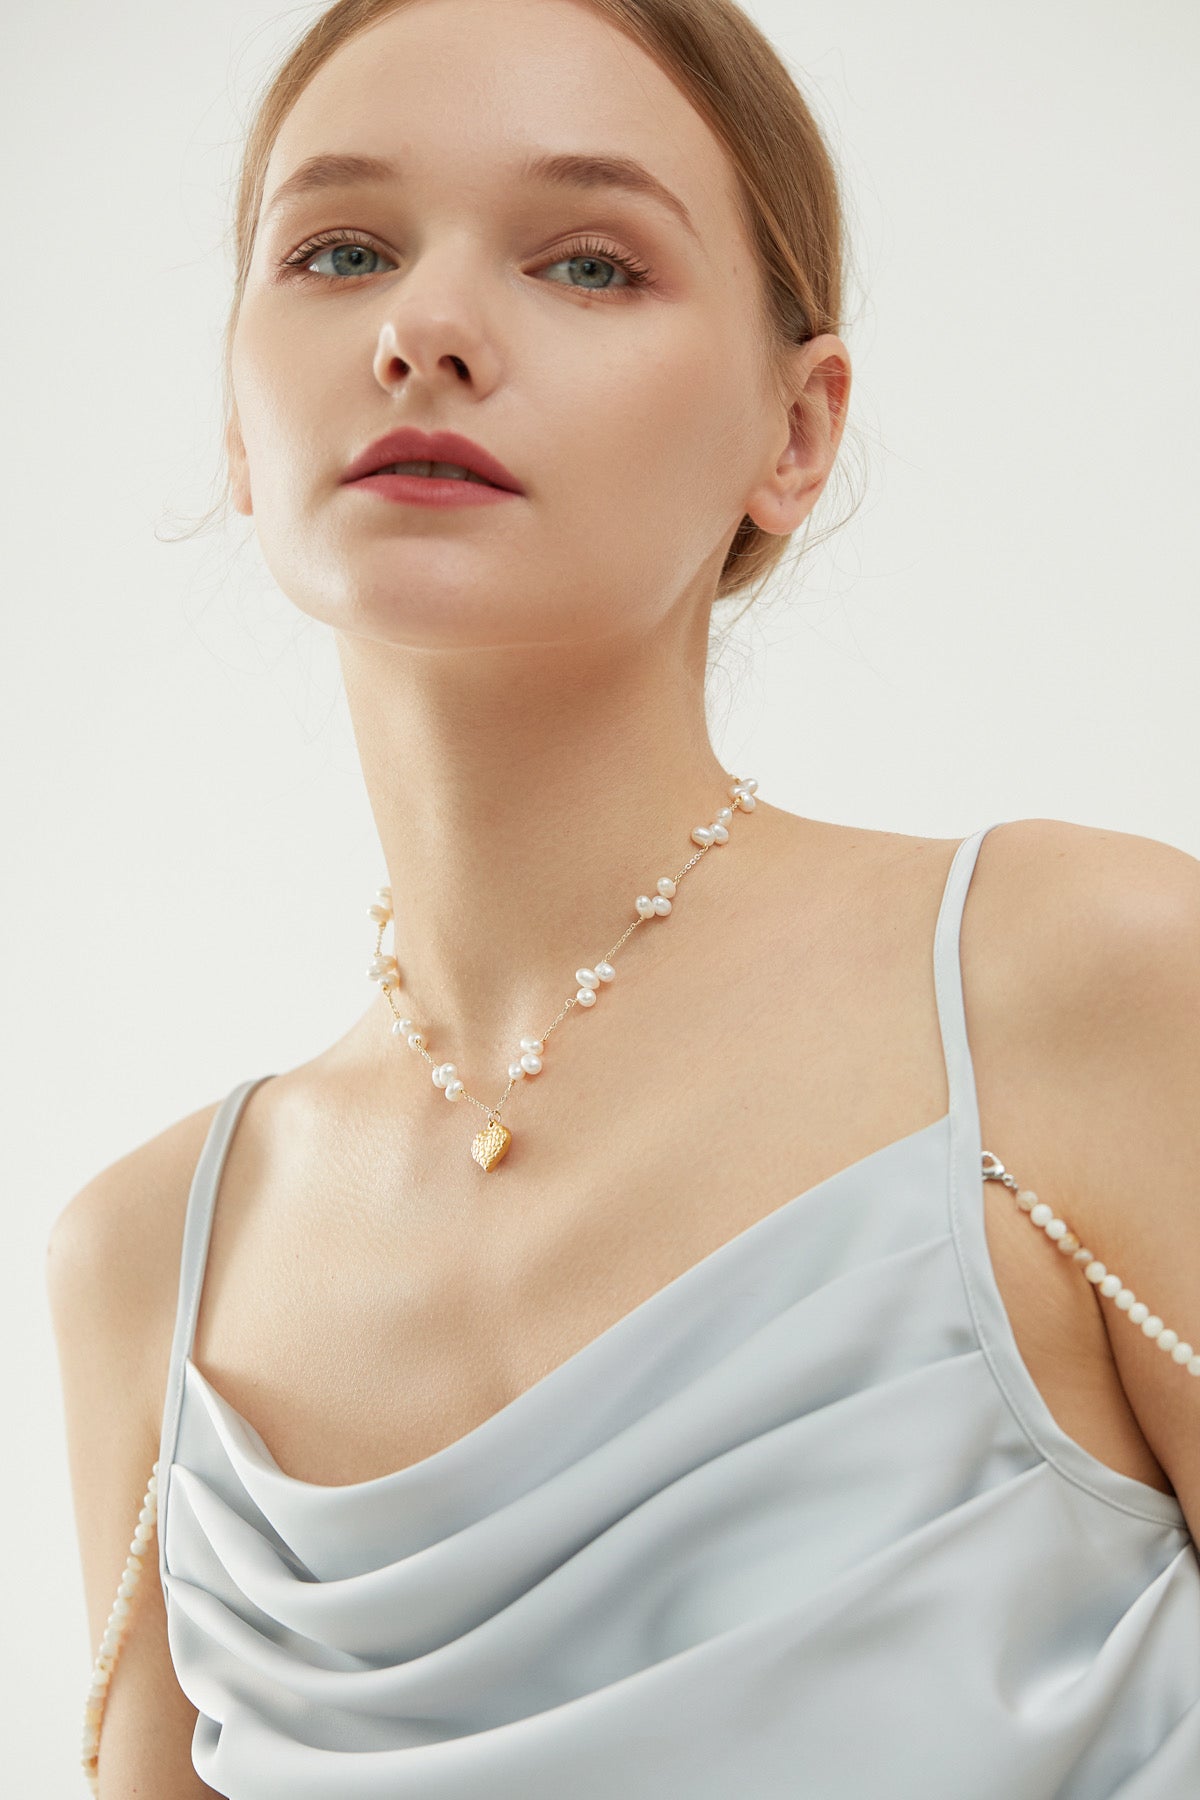 SKYE San Francisco Shop Chic Modern Elegant Classy Women Jewelry French Parisian Minimalist Angeline Heart Pendant Pearl Necklace 8